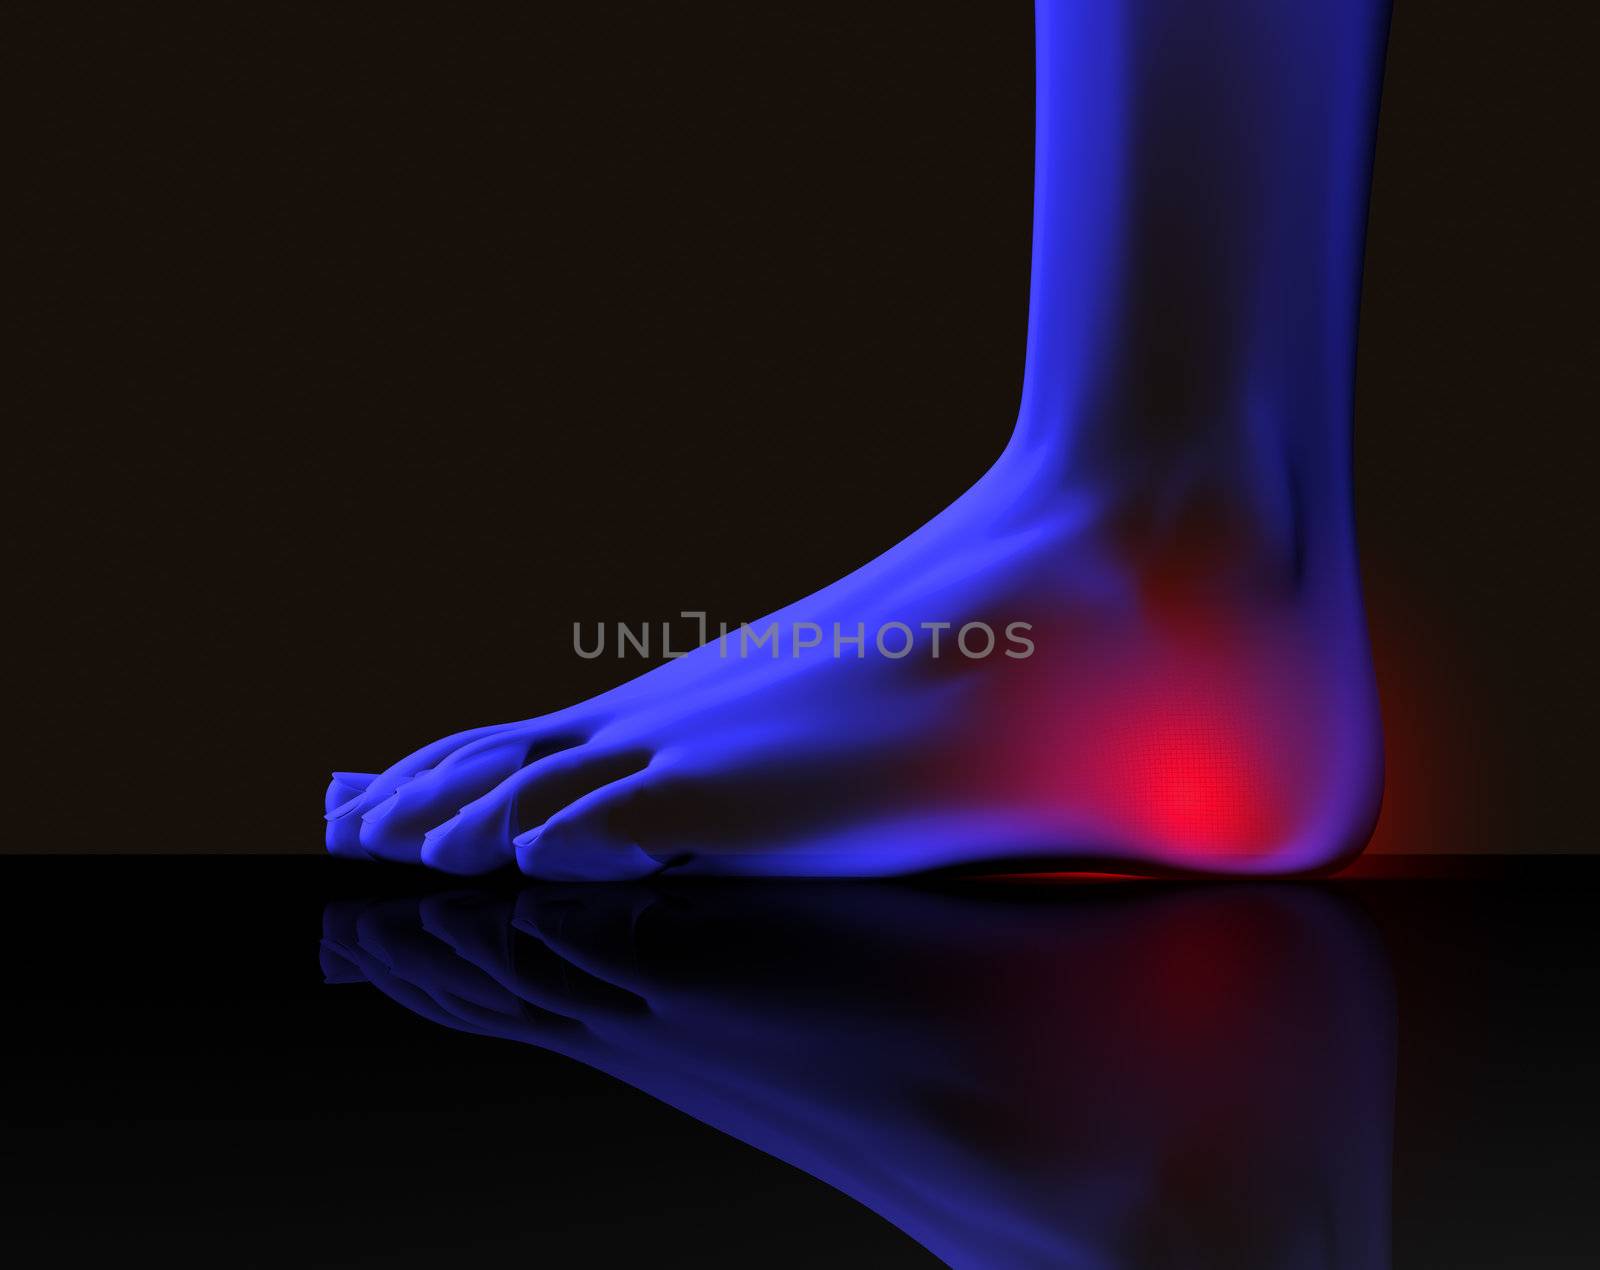 Foot and pain by carloscastilla